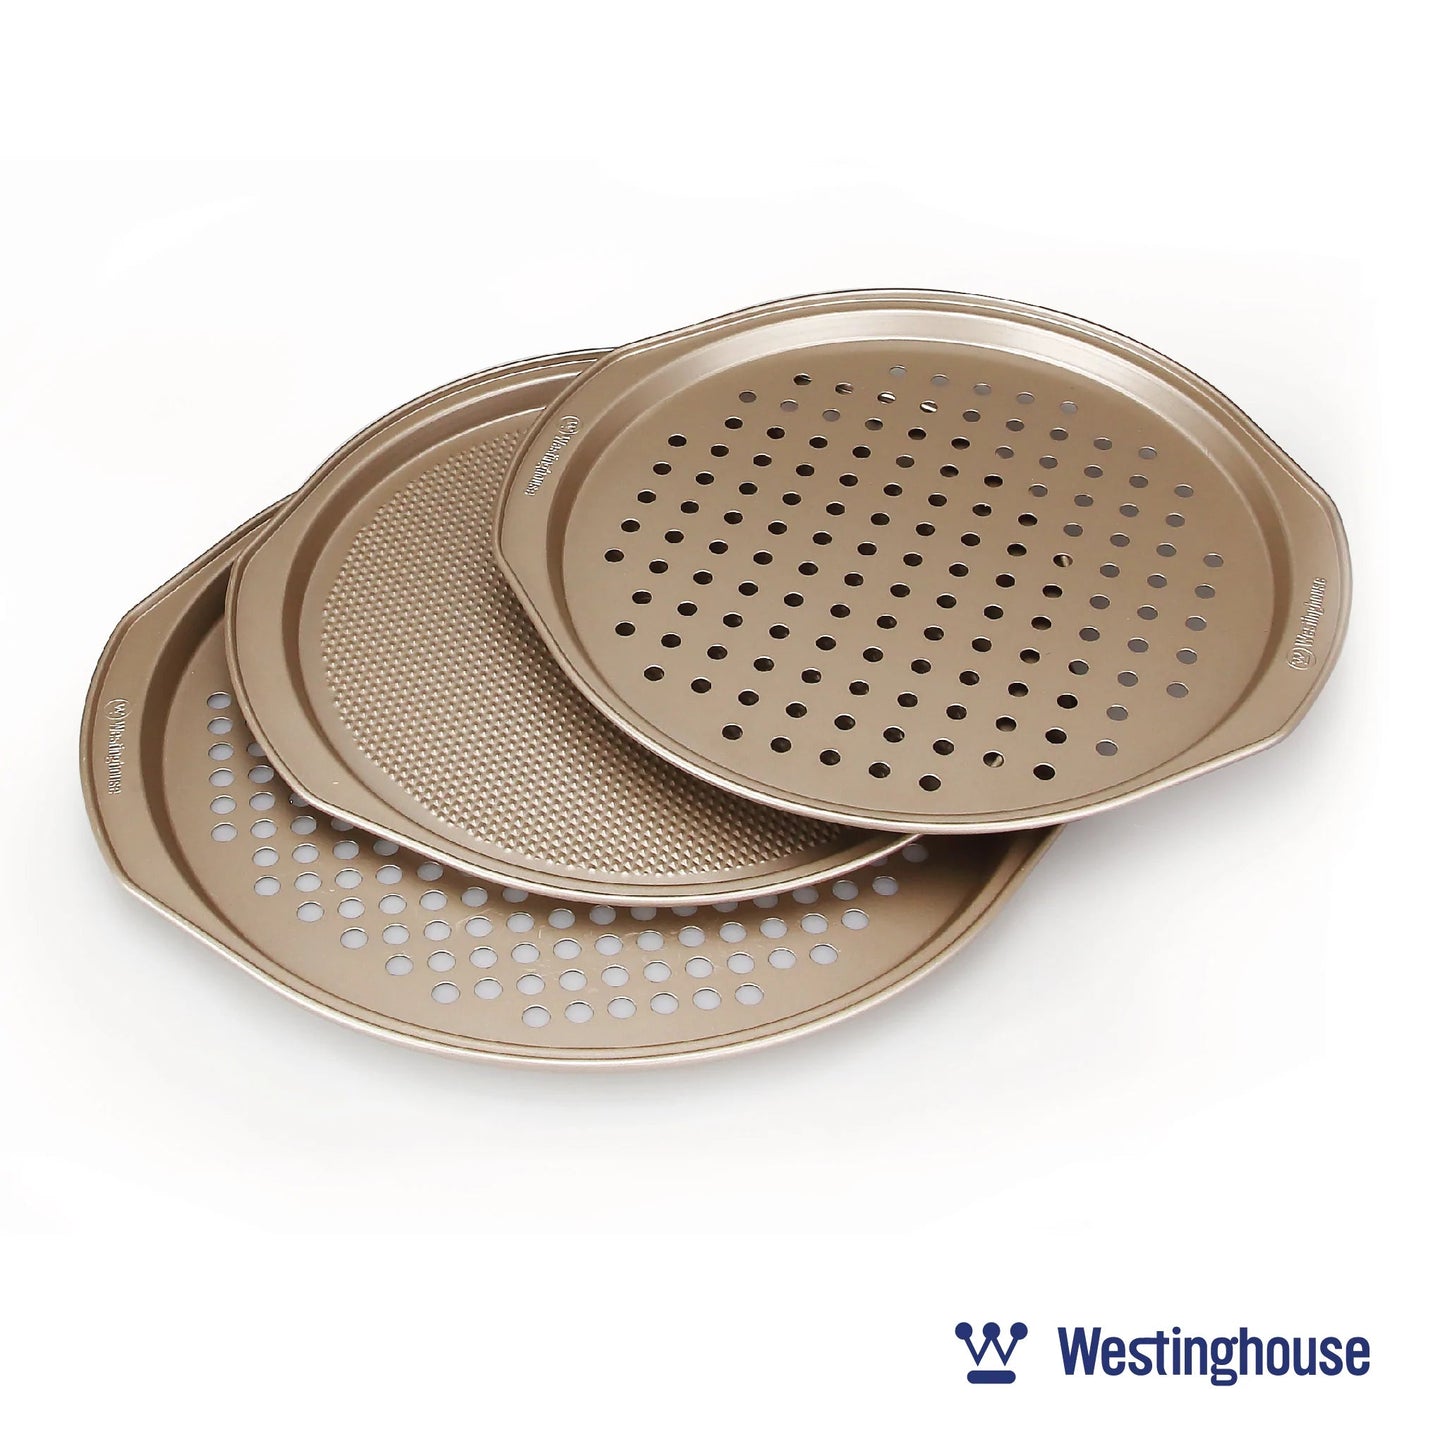 Westinghouse 3-Piece Carbon Steel Pizza Pan Set With Premium Non-stick Coating